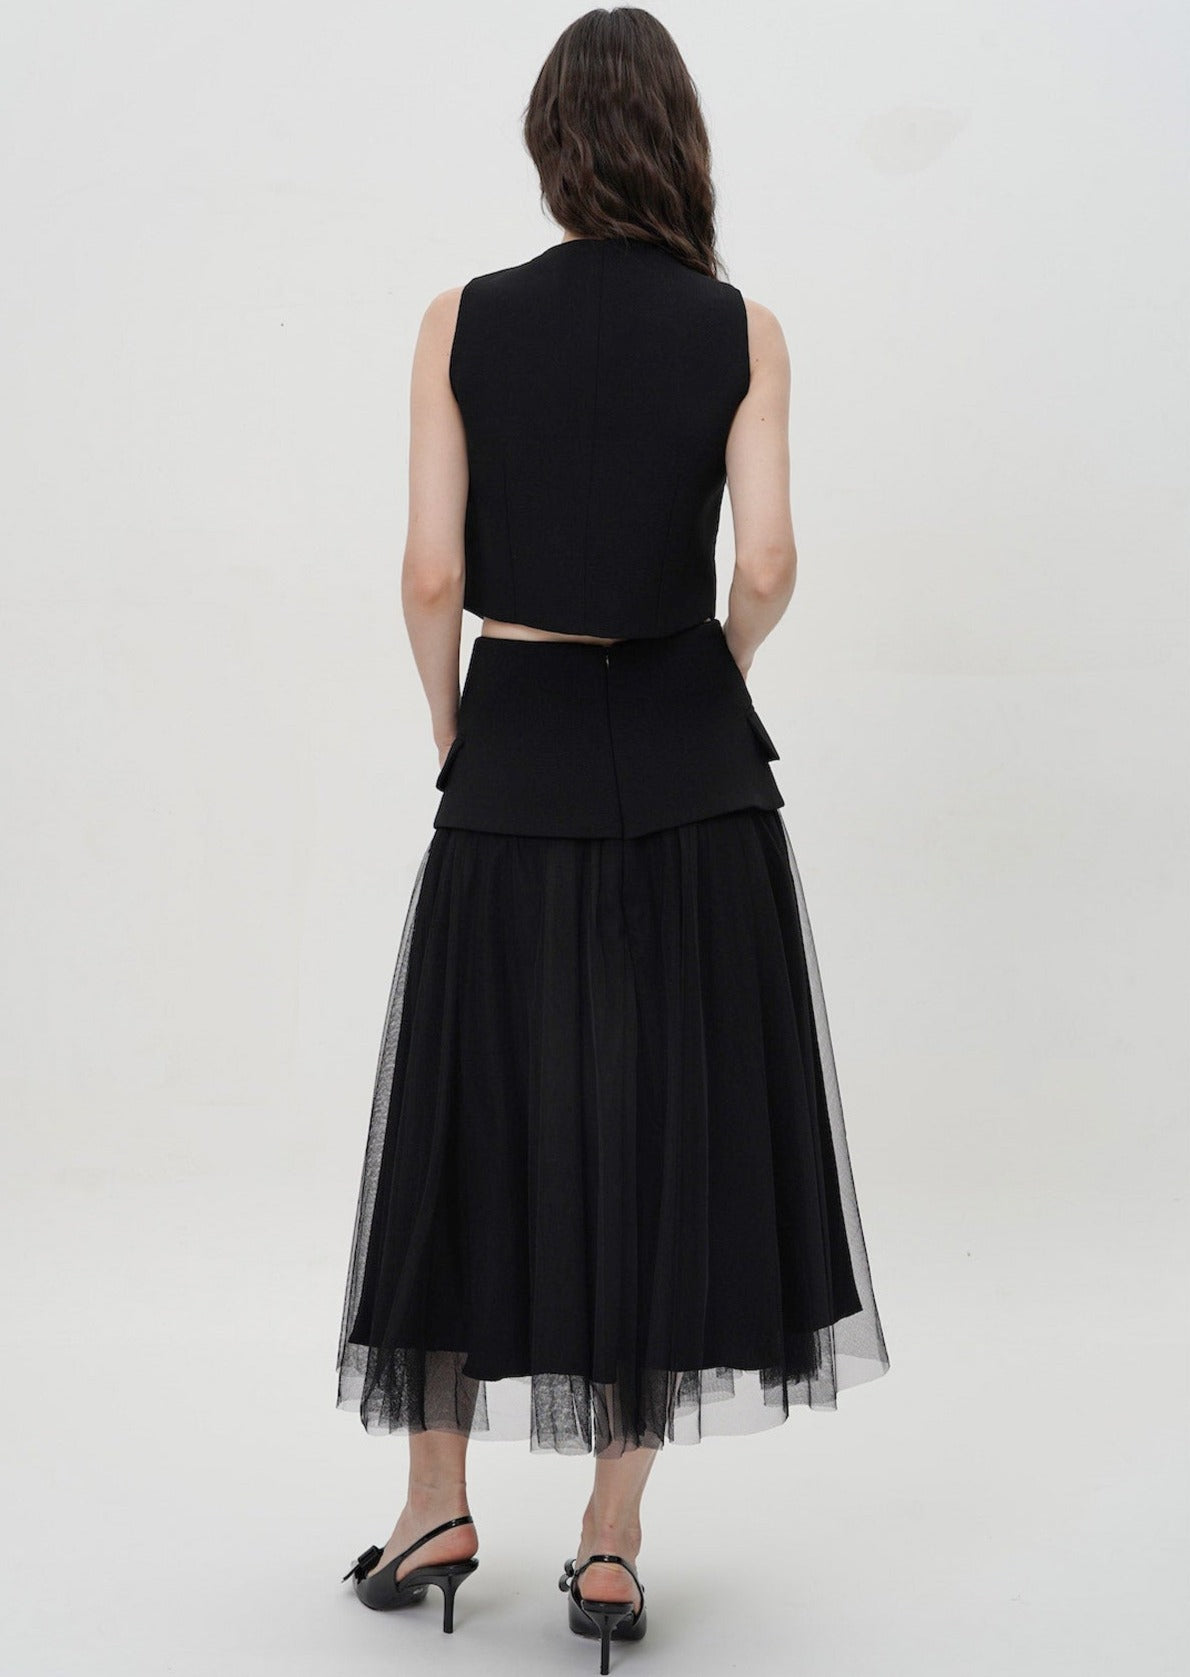 Jiva Skirt in Black